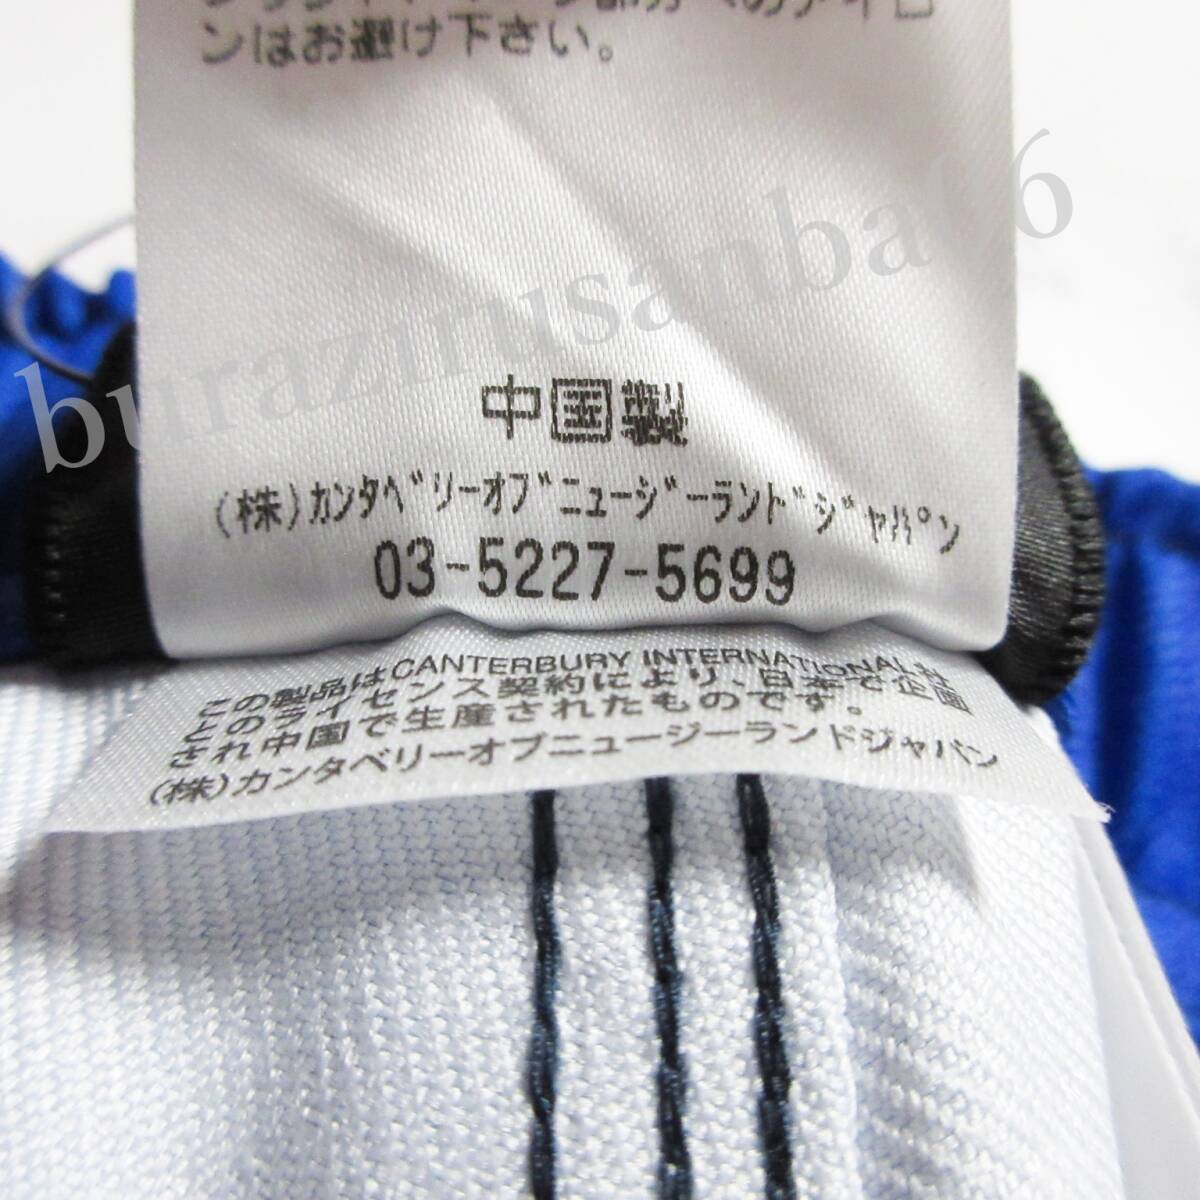  men's M* unused regular price 9,680 jpy canterbury canterbury rugby Japan representative model JAPAN rugby shorts rug bread high endurance R26506J